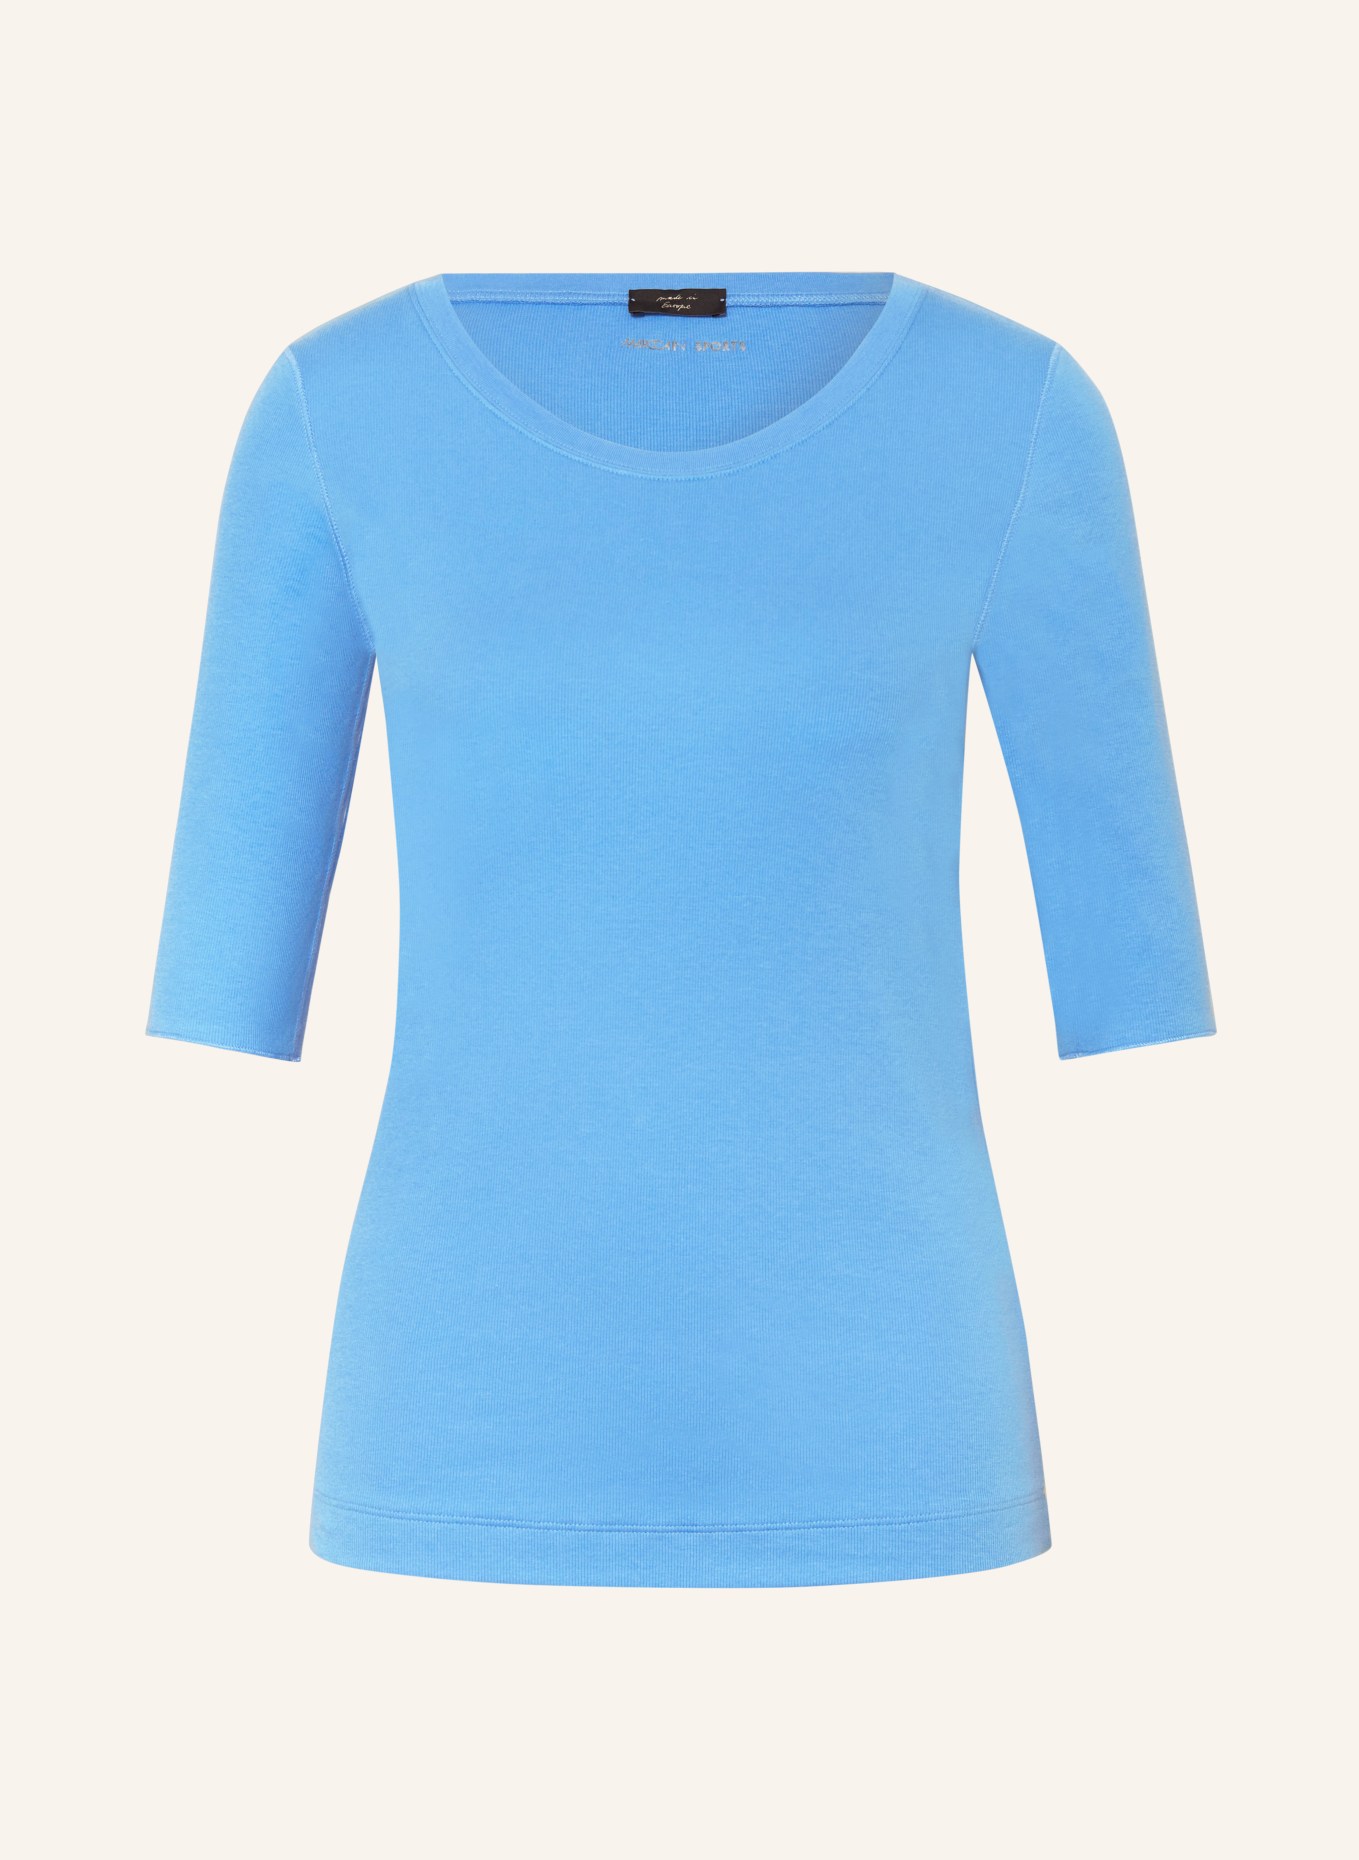 MARC CAIN T-Shirt, Farbe: 363 bright azure (Bild 1)